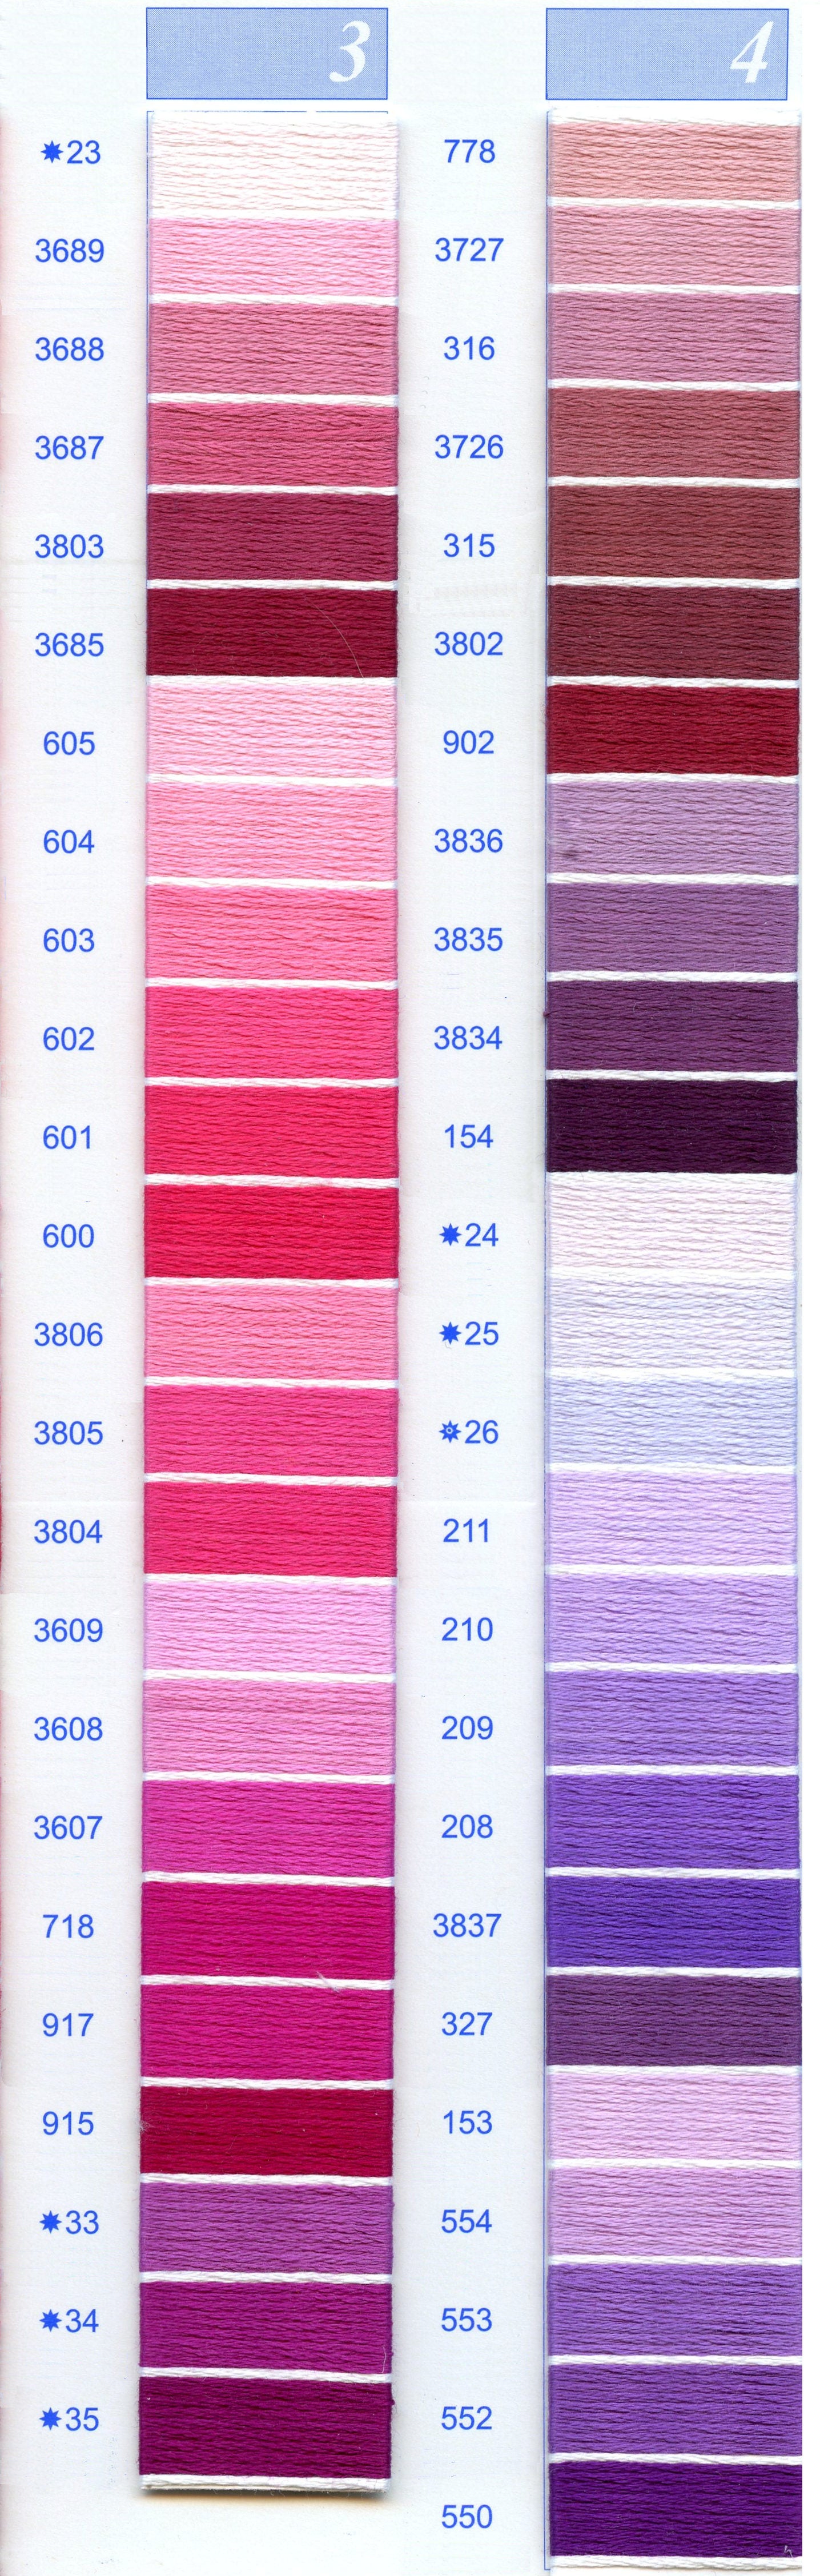 DMC Embroidery Floss (Color # 150 - 519)